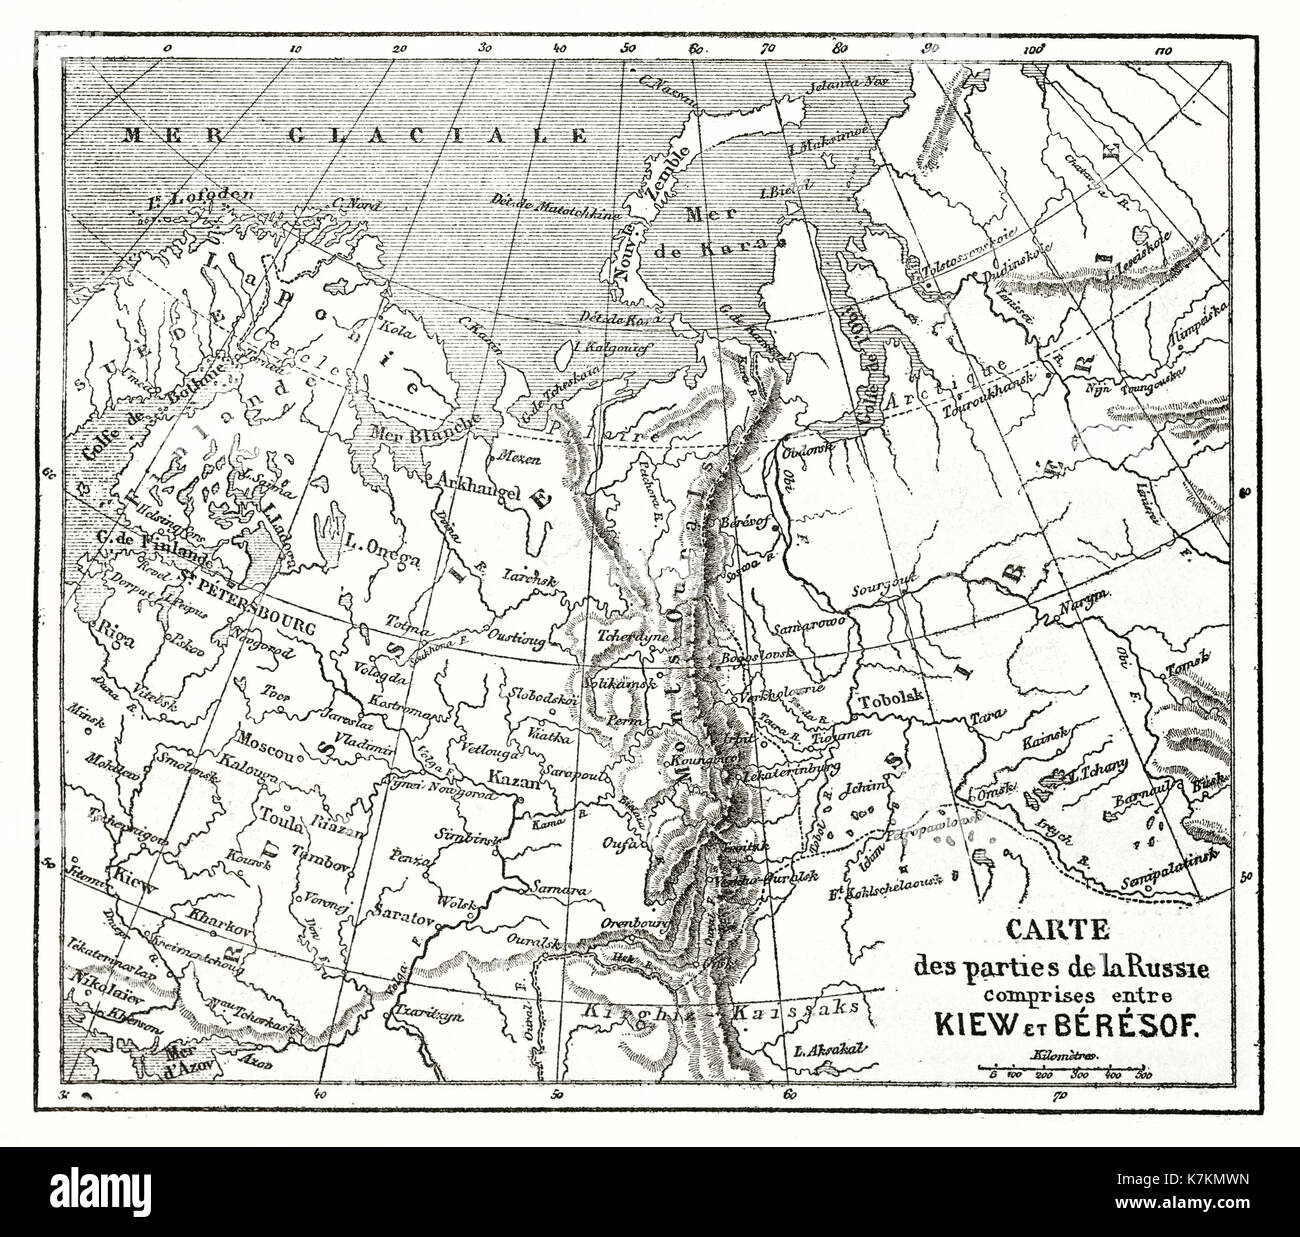 Old map of Russia. By Vullemin and Bonaparte, publ. on Le Tour du Monde, Paris, 1862 Stock Photo